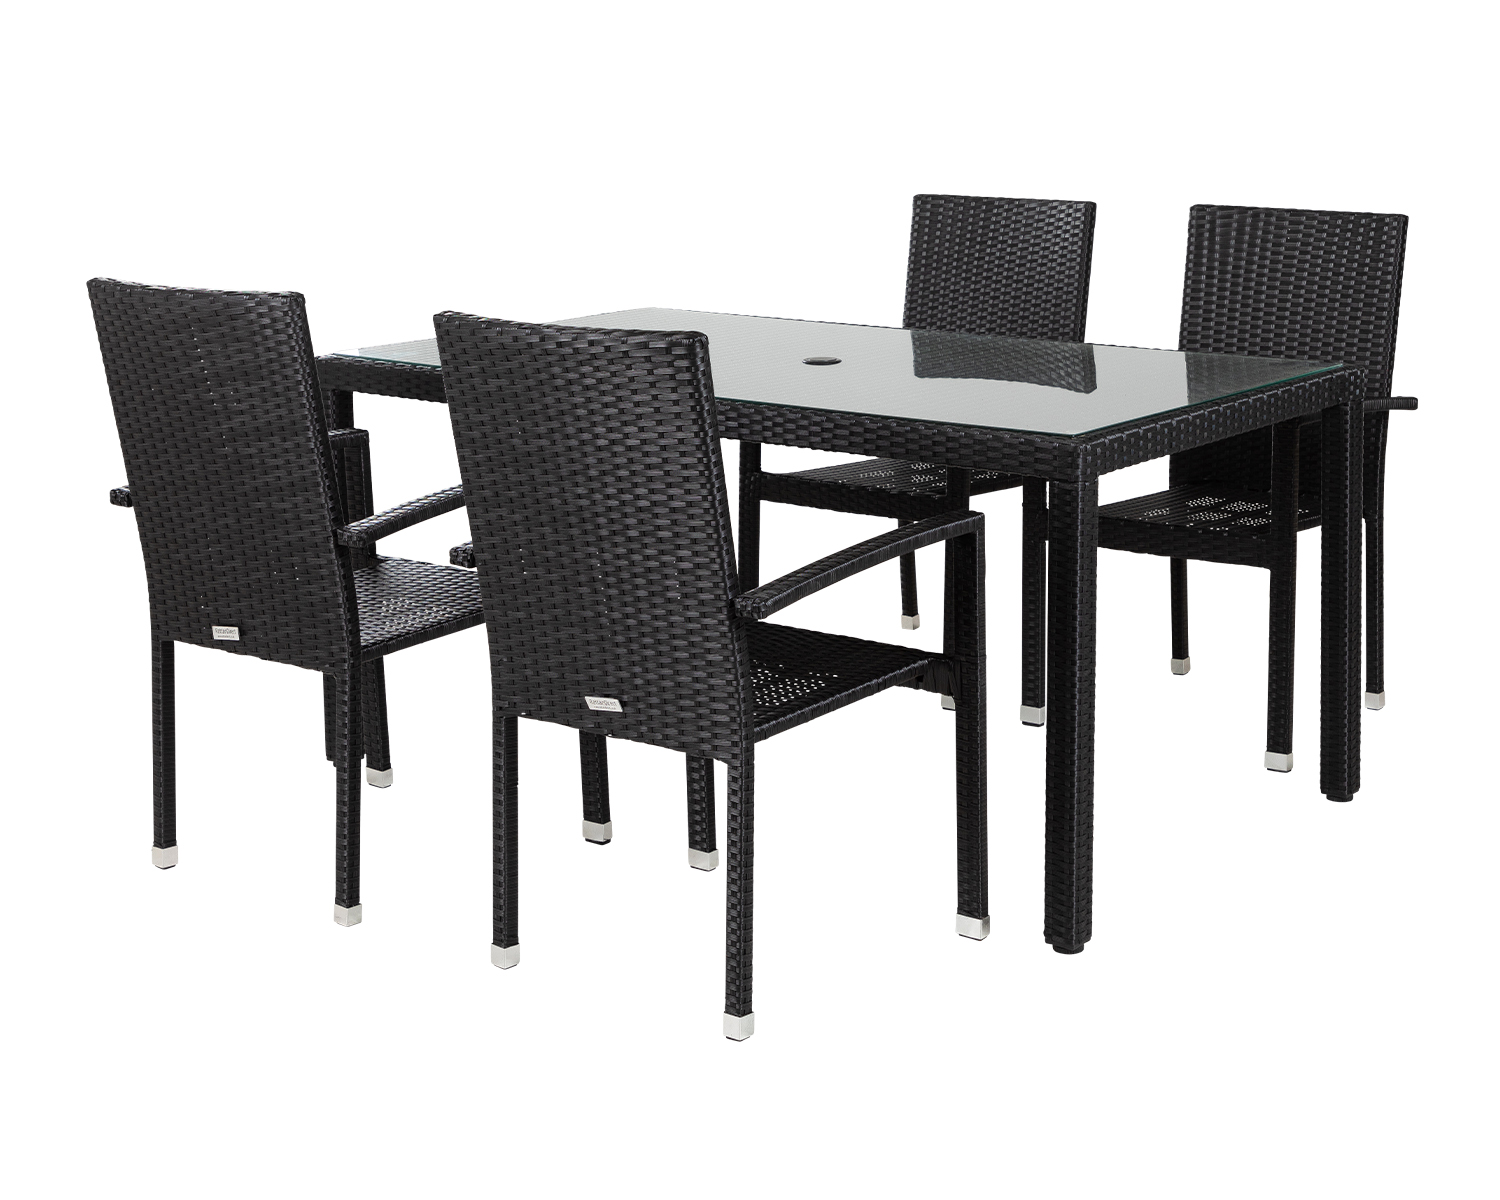 4 Seat Rattan Garden Dining Set With Open Leg Rectangular Table In Black Rio Rattan Direct